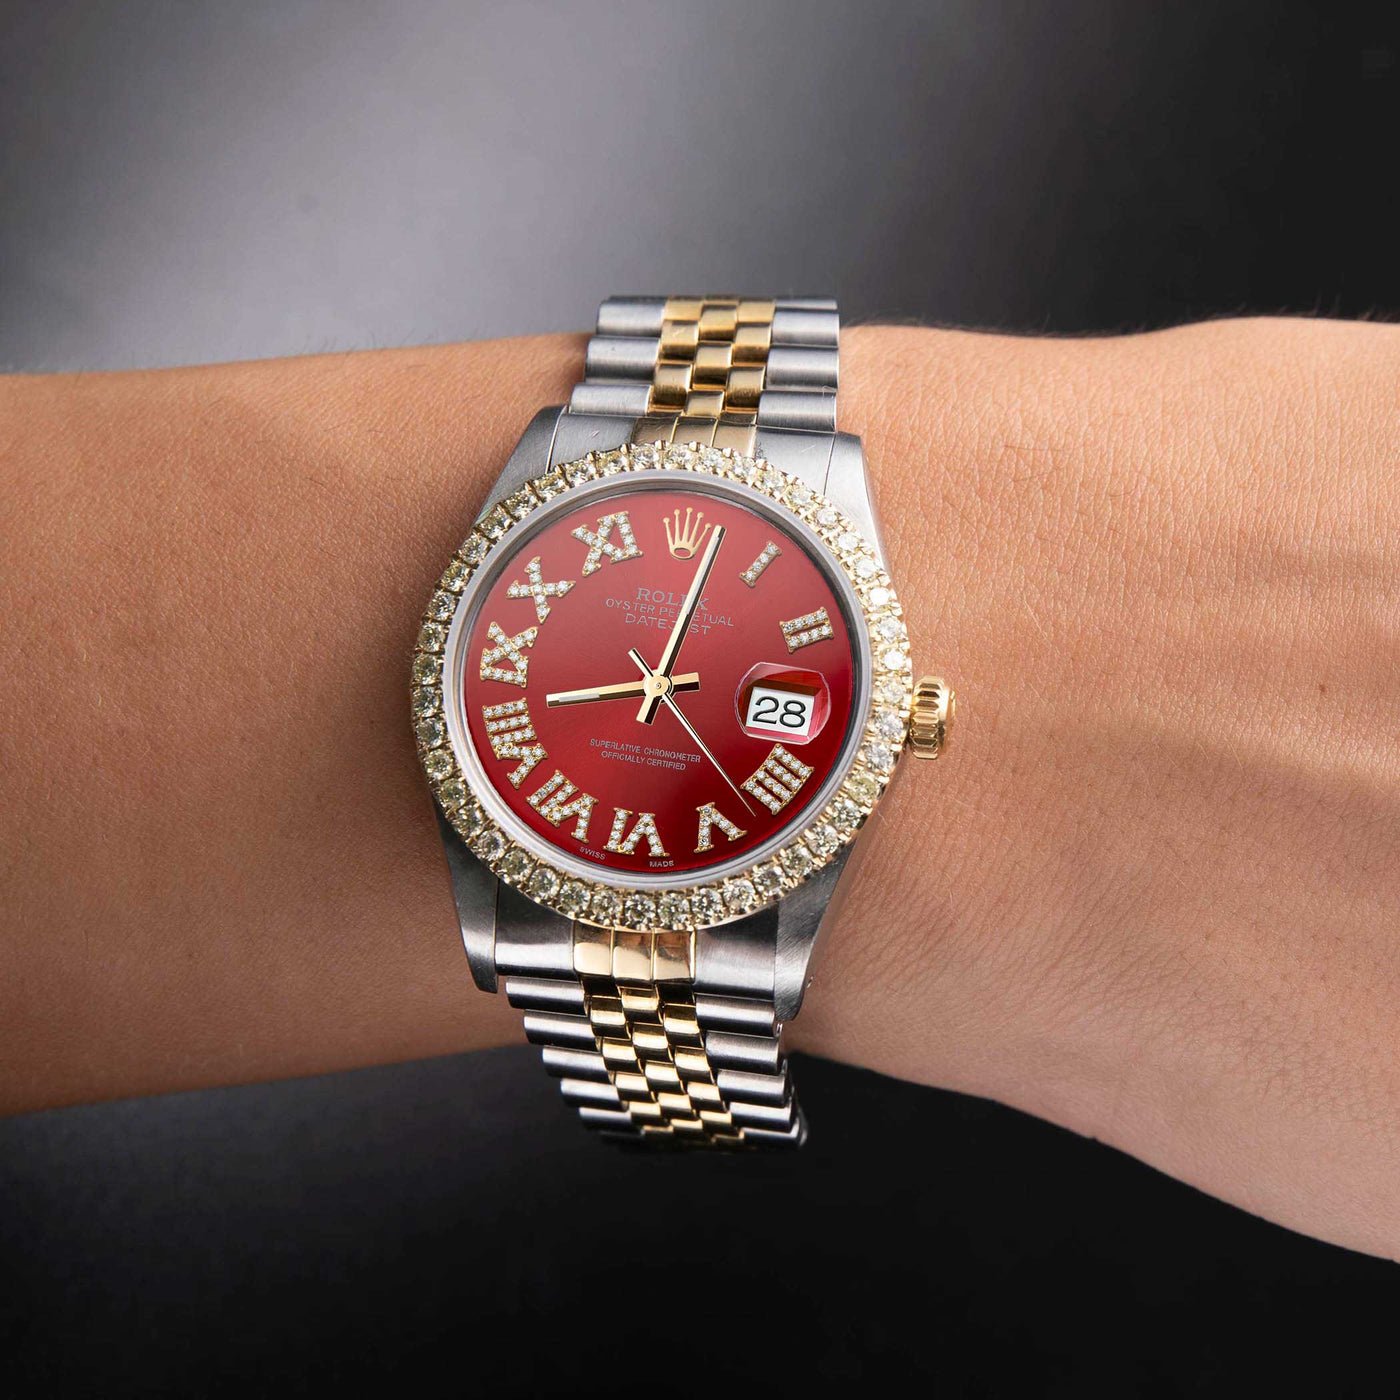 Rolex Datejust Diamond Bezel Watch 36mm Red Roman Numeral Dial | 2.15ct